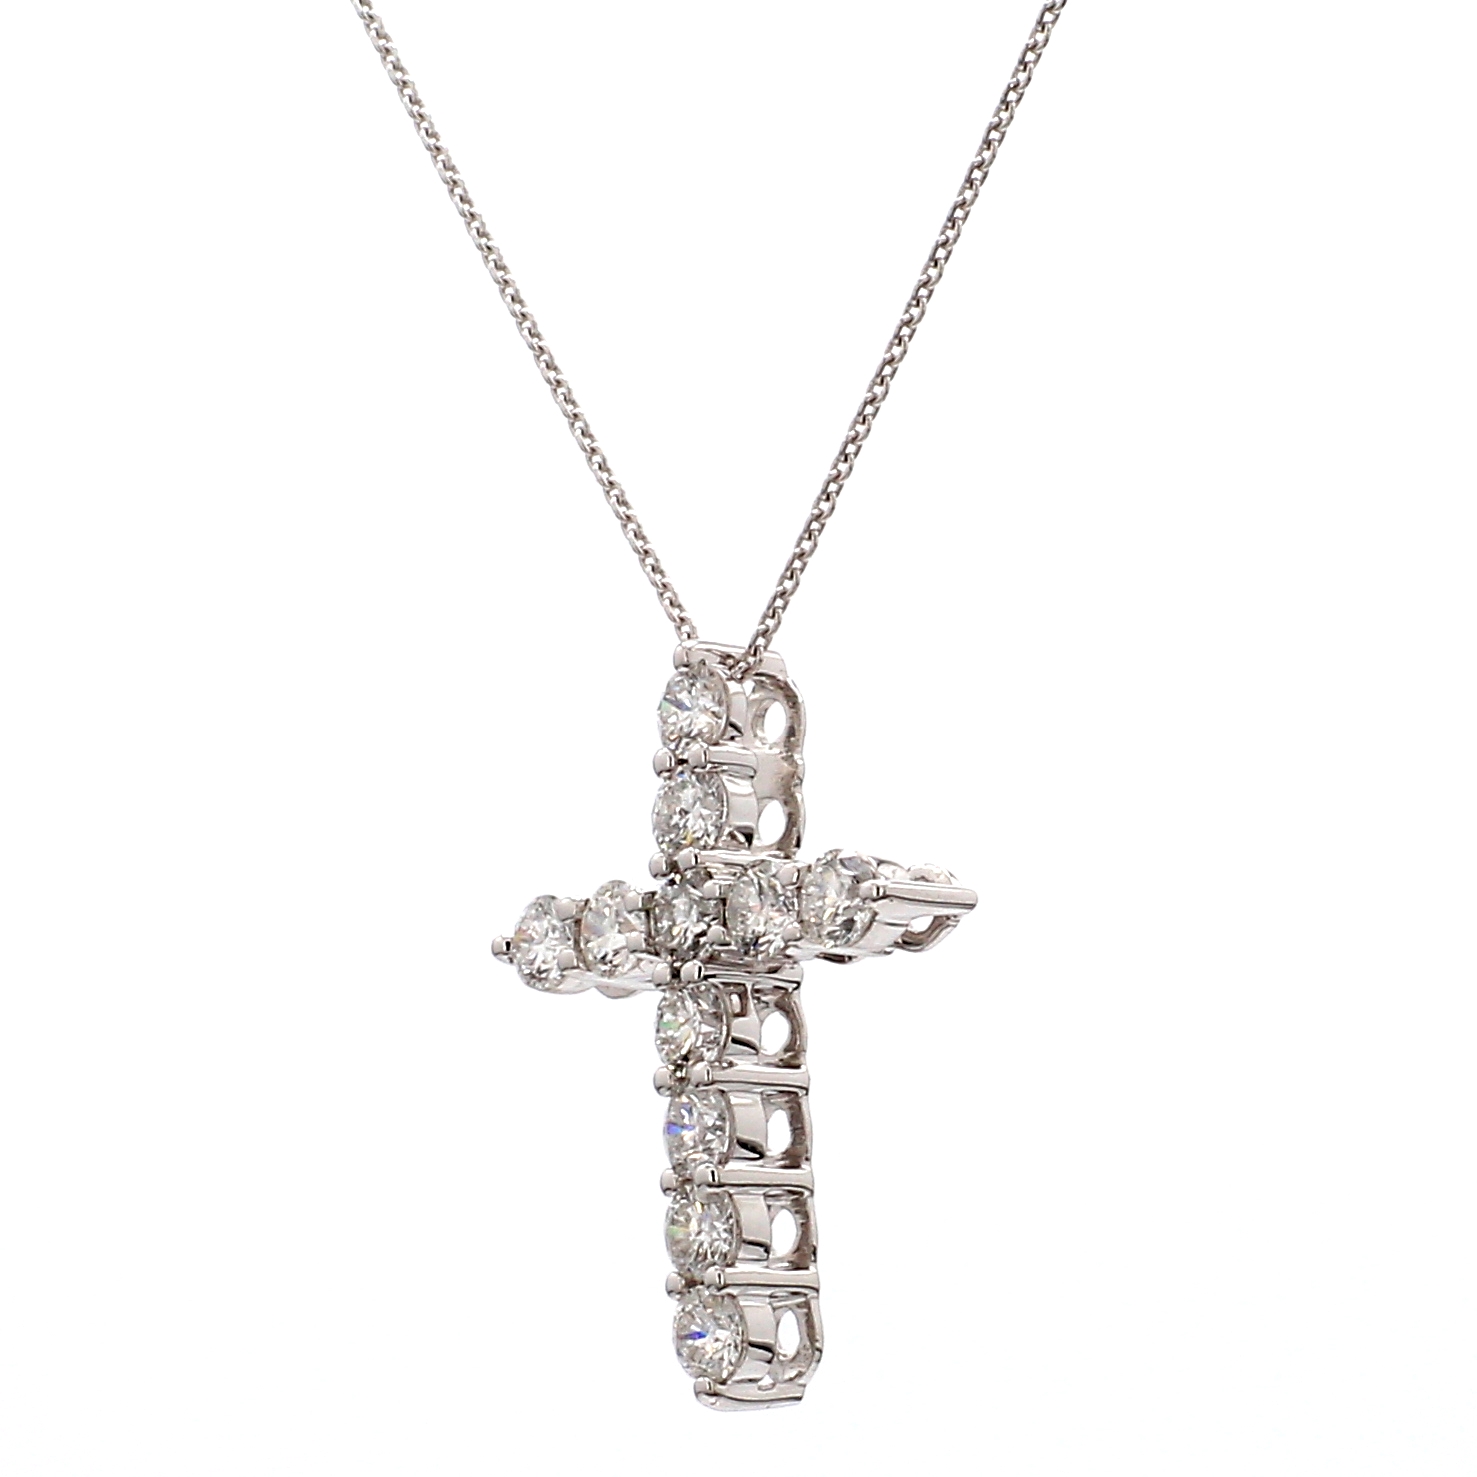 34ctw Diamond Cross Pendant Necklace In 14k White Gold Baileys Fine Jewelry 9804